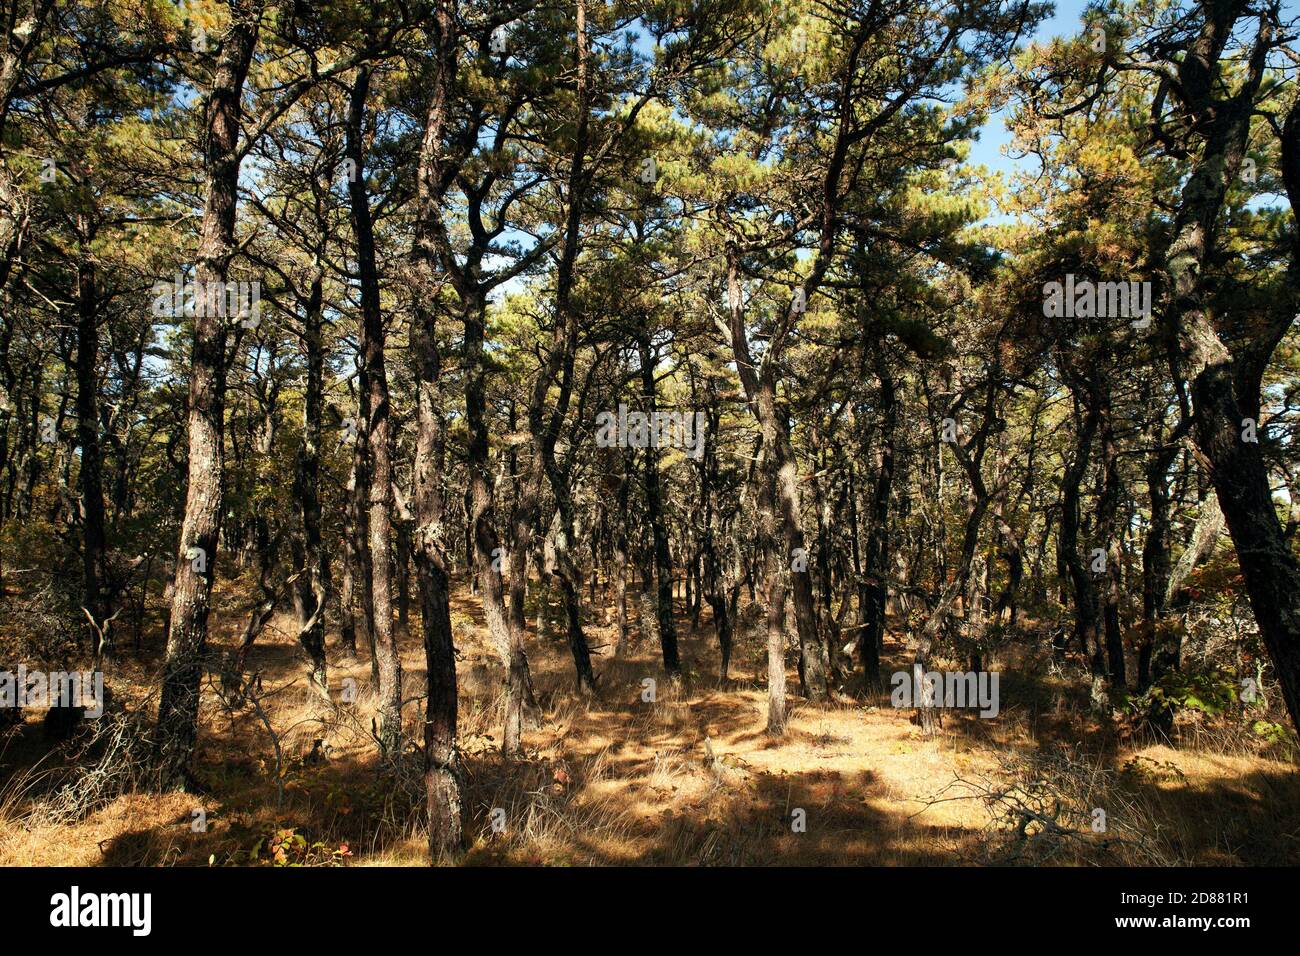 A grove of scrub pines, native to Cape Cod, grows in the mid cape area, near the Cape Cod National Seashore in Massachusetts. Stock Photo